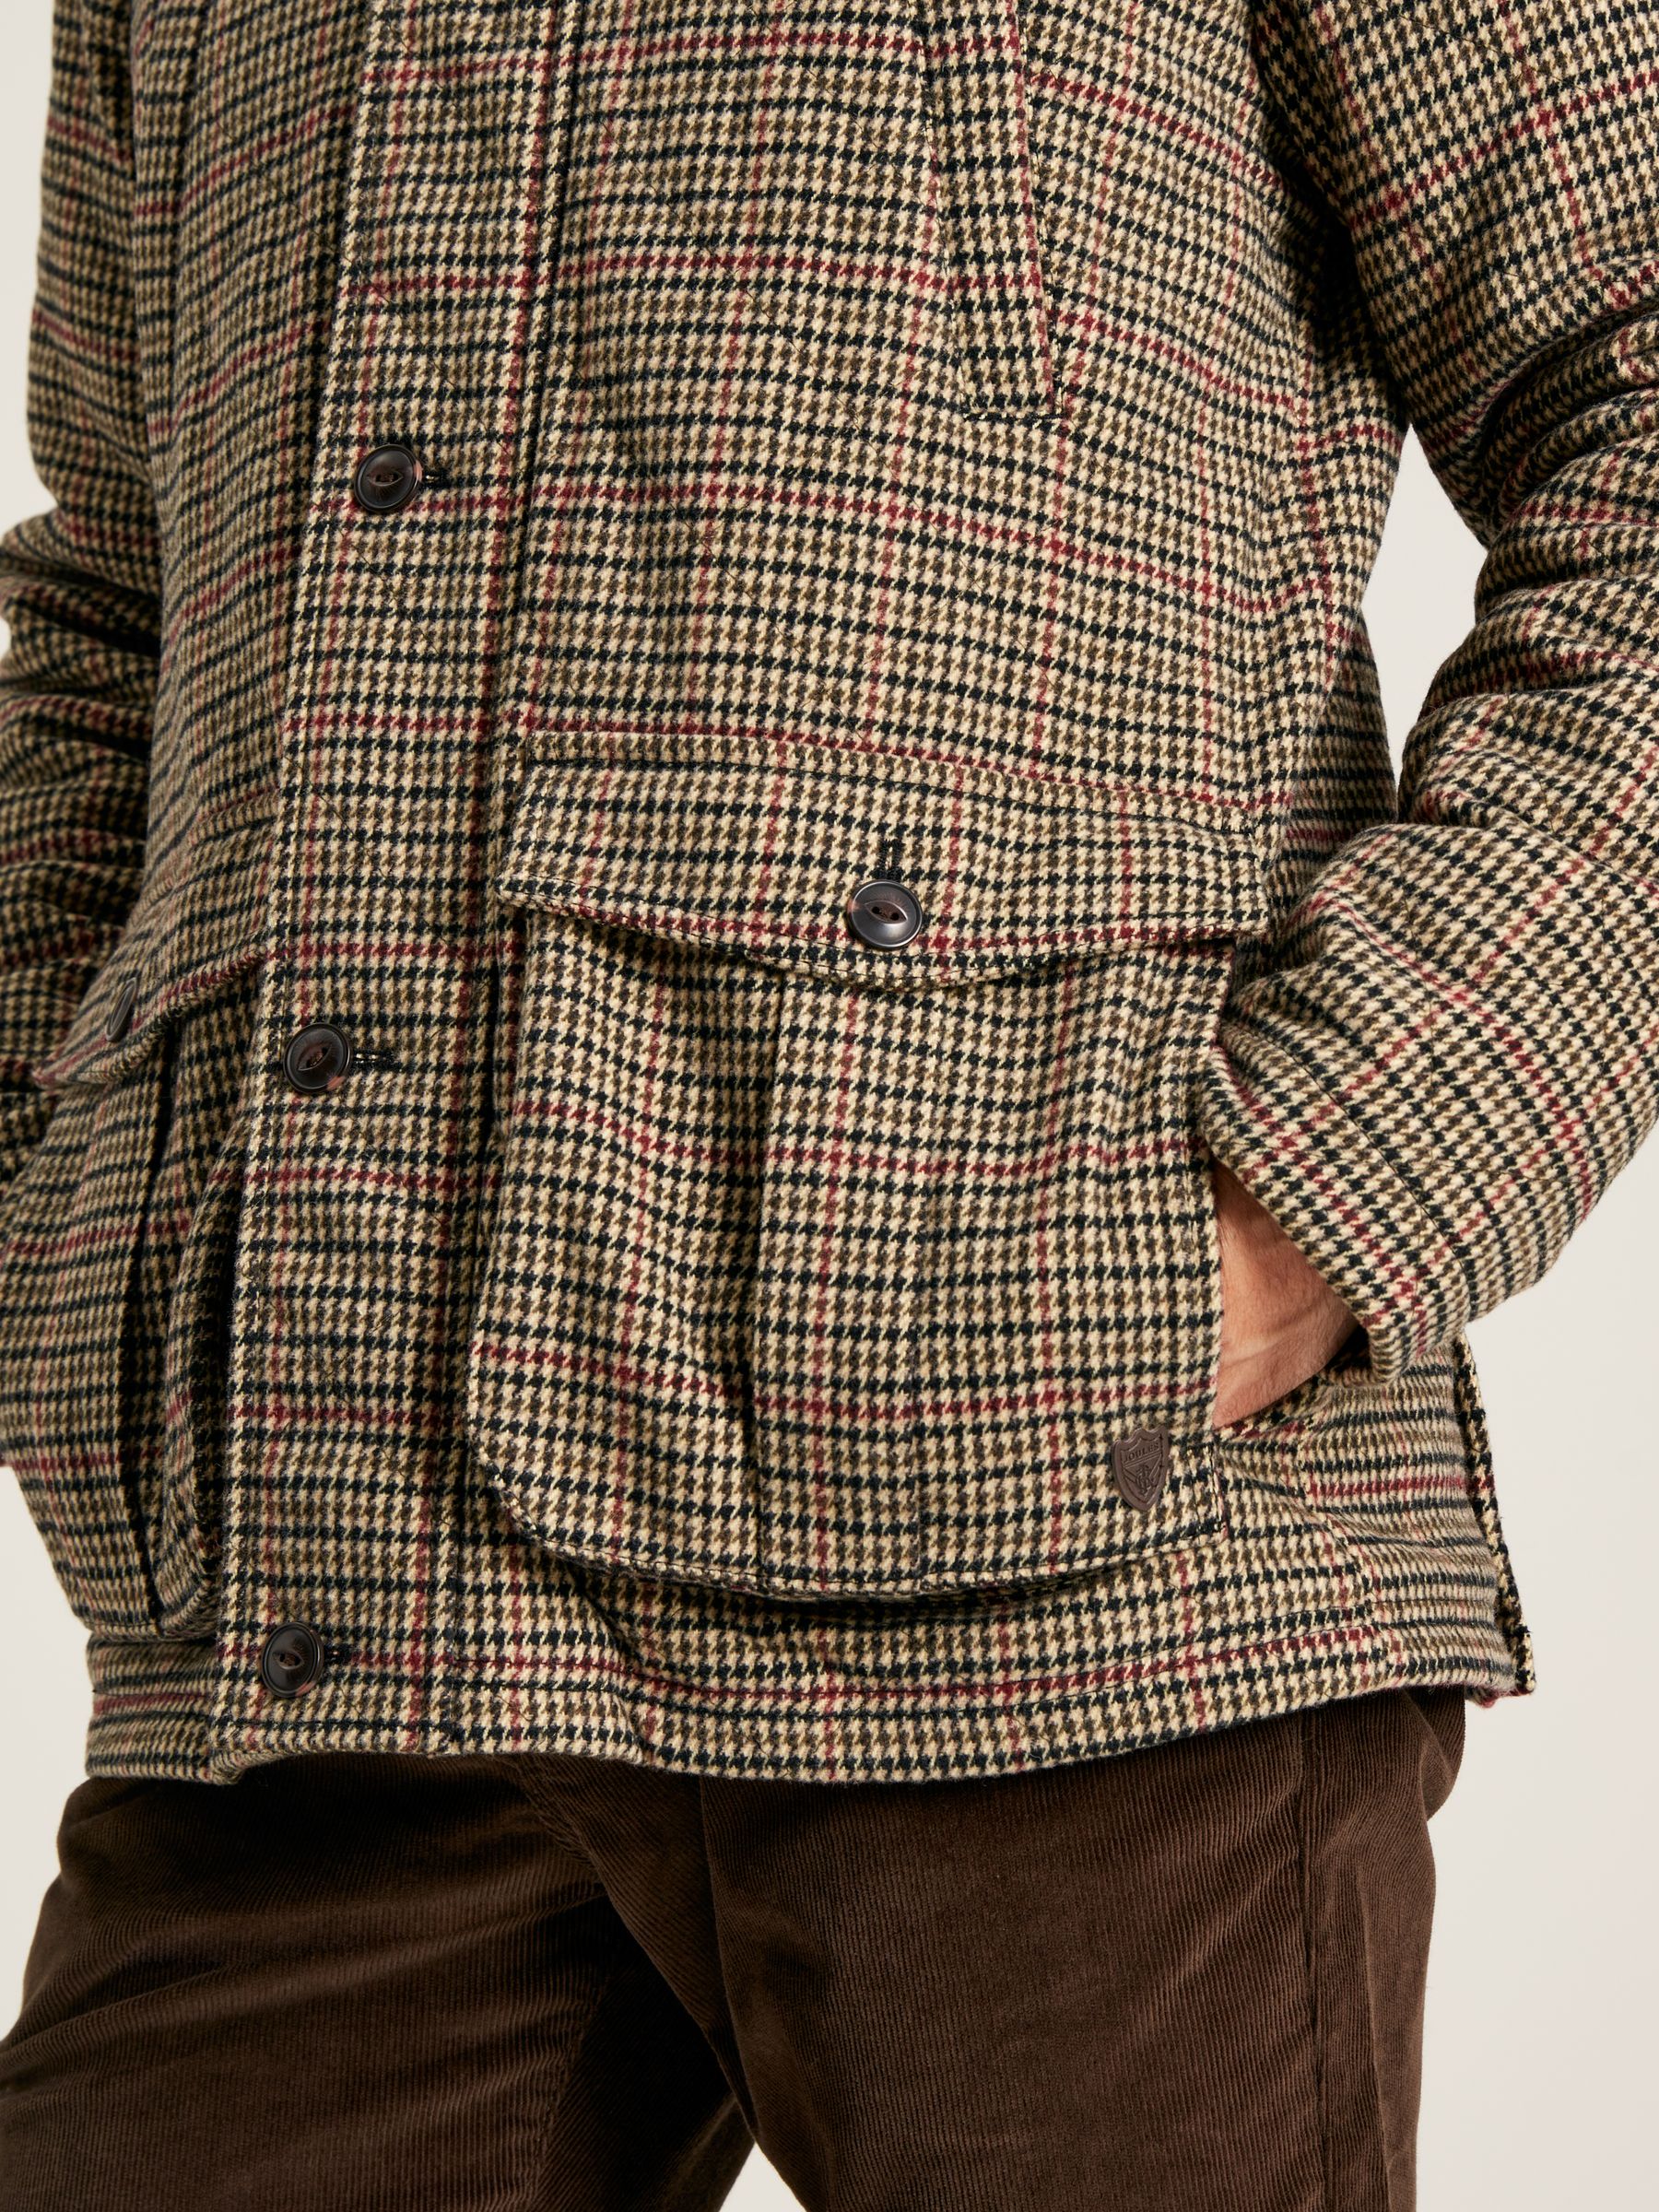 Buy Marriott Brown Tweed Jacket from the Joules online shop